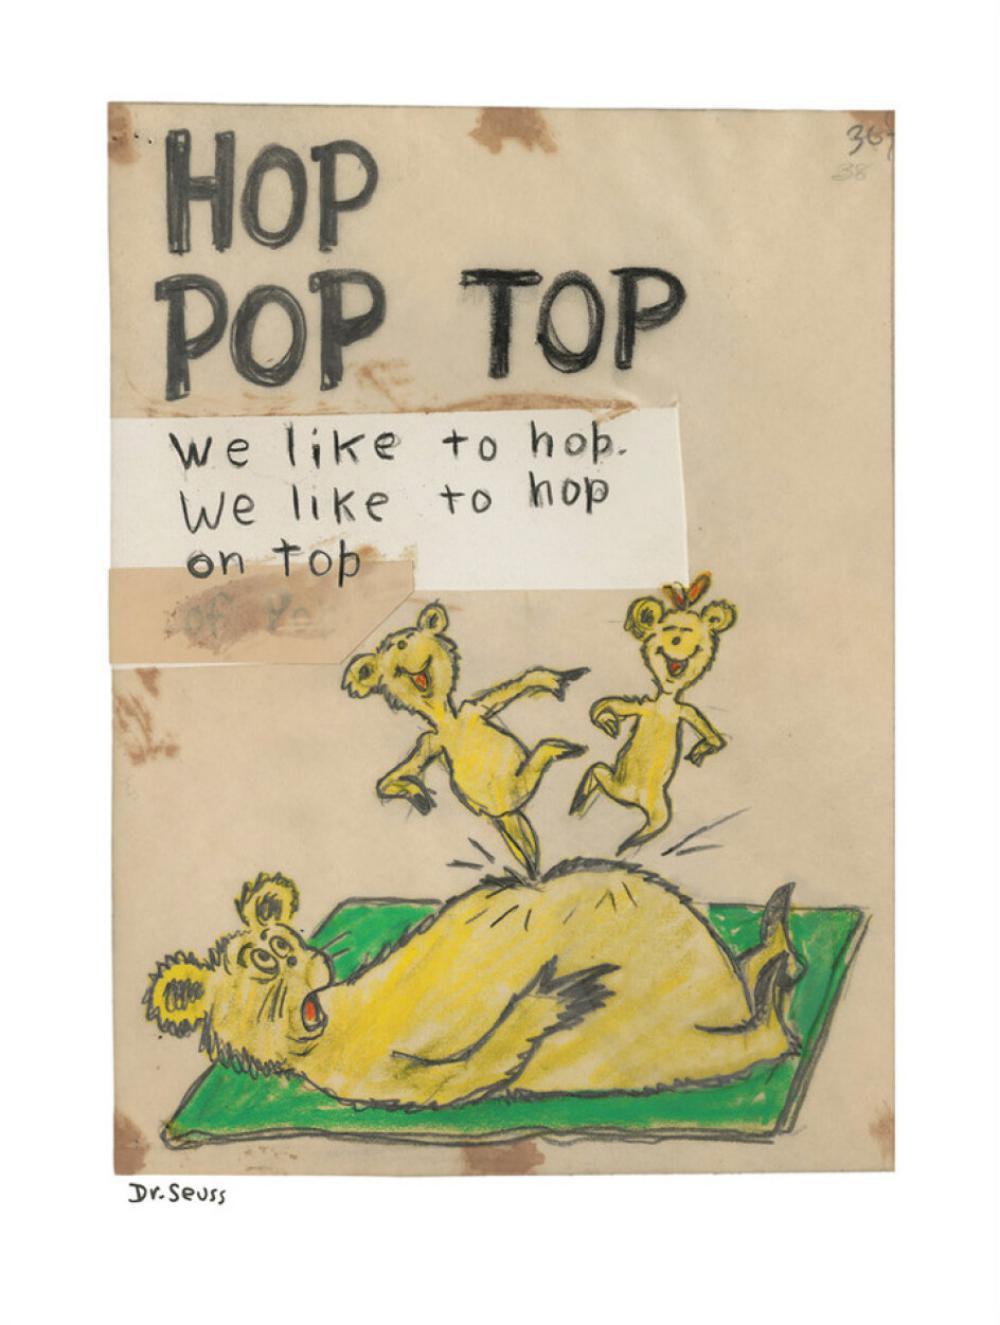 (after) Dr. Seuss (Theodore Geisel) Animal Print - HOP POP TOP